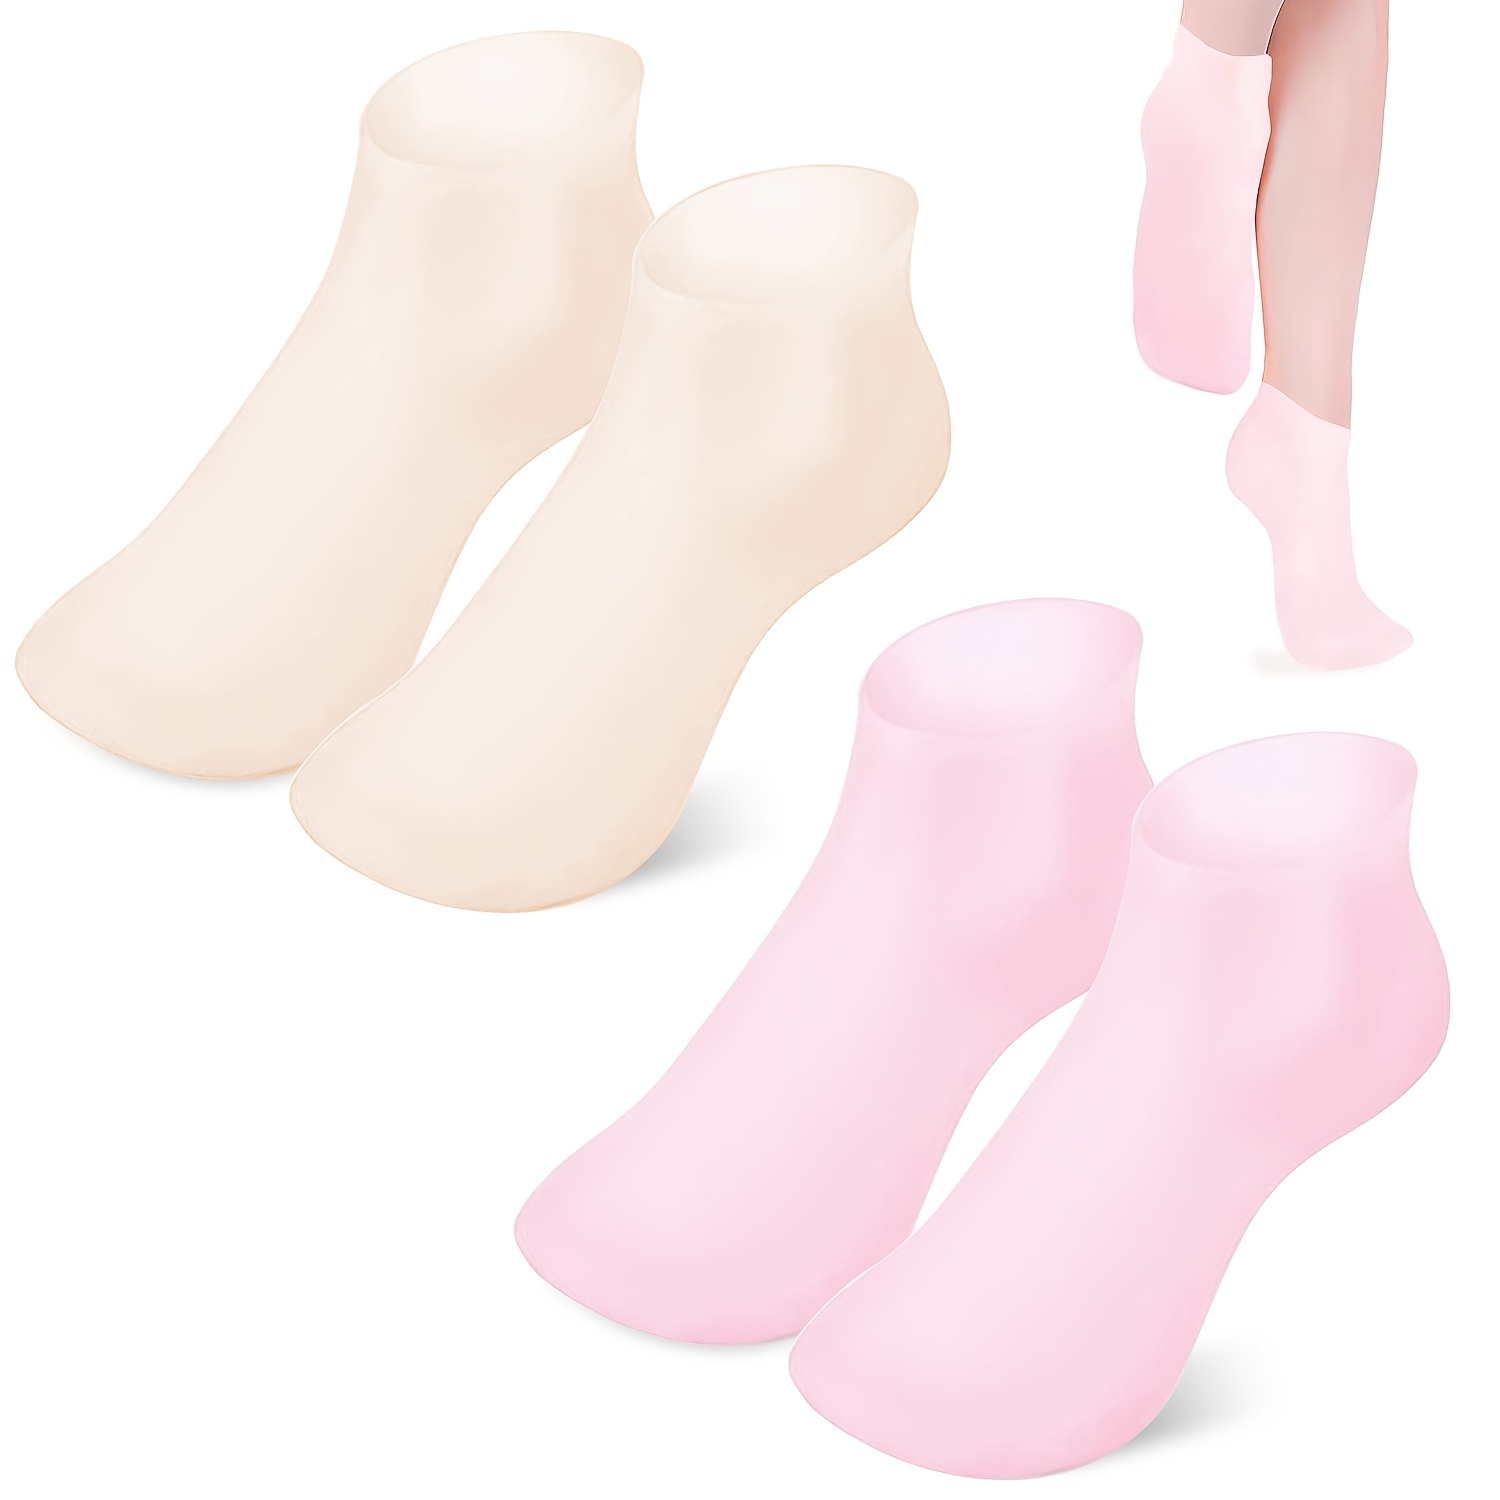 

2 Pair Silicone Gel Moisturizing Socks Pedicure Socks For Dry Cracked Feet Heel And Softening Rough Skin